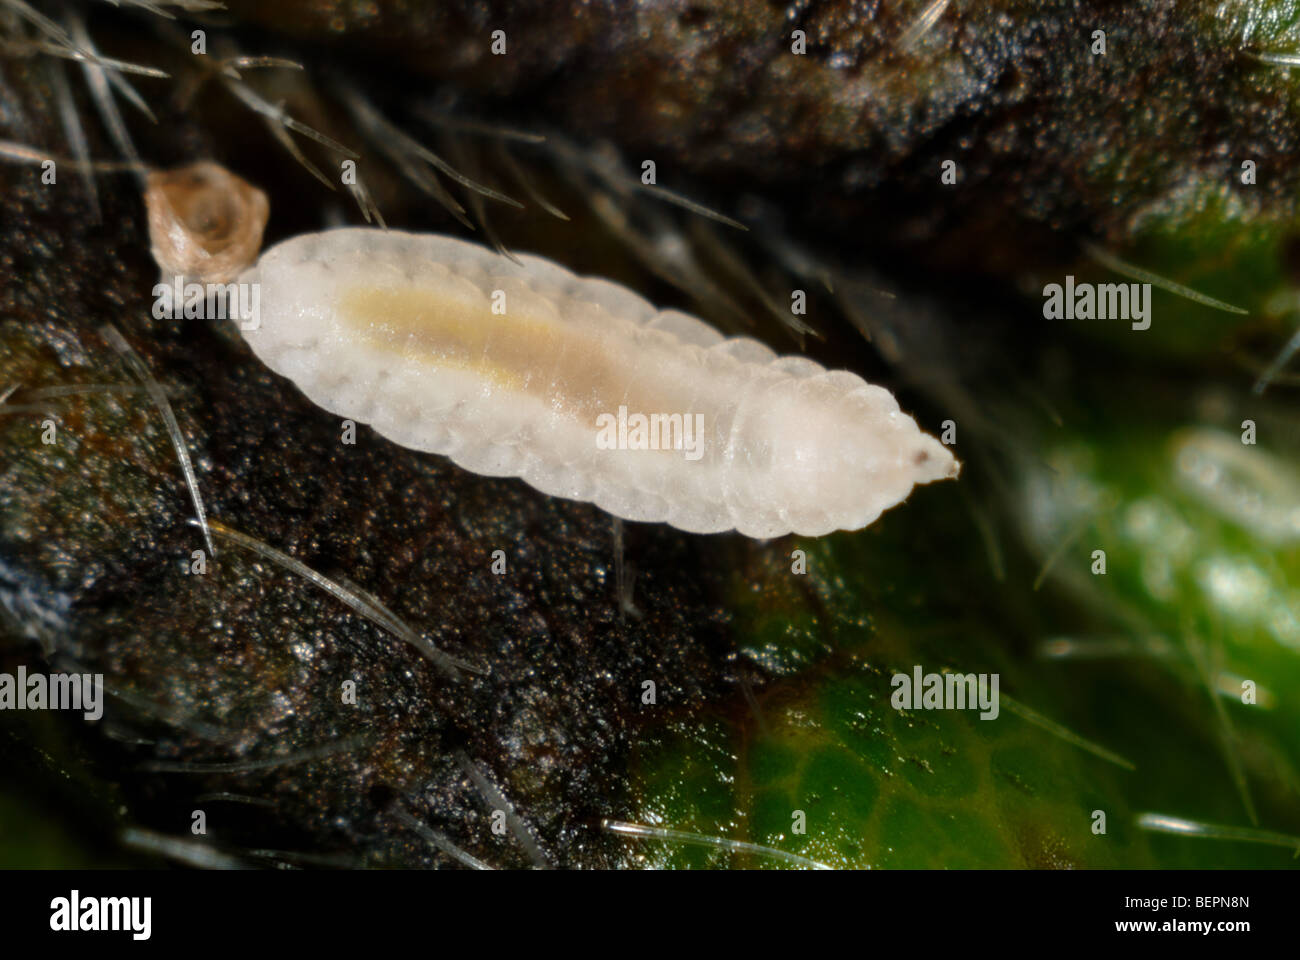 Blackberry midge (Dasineura plicatrix) larvae on a leaf Stock Photo